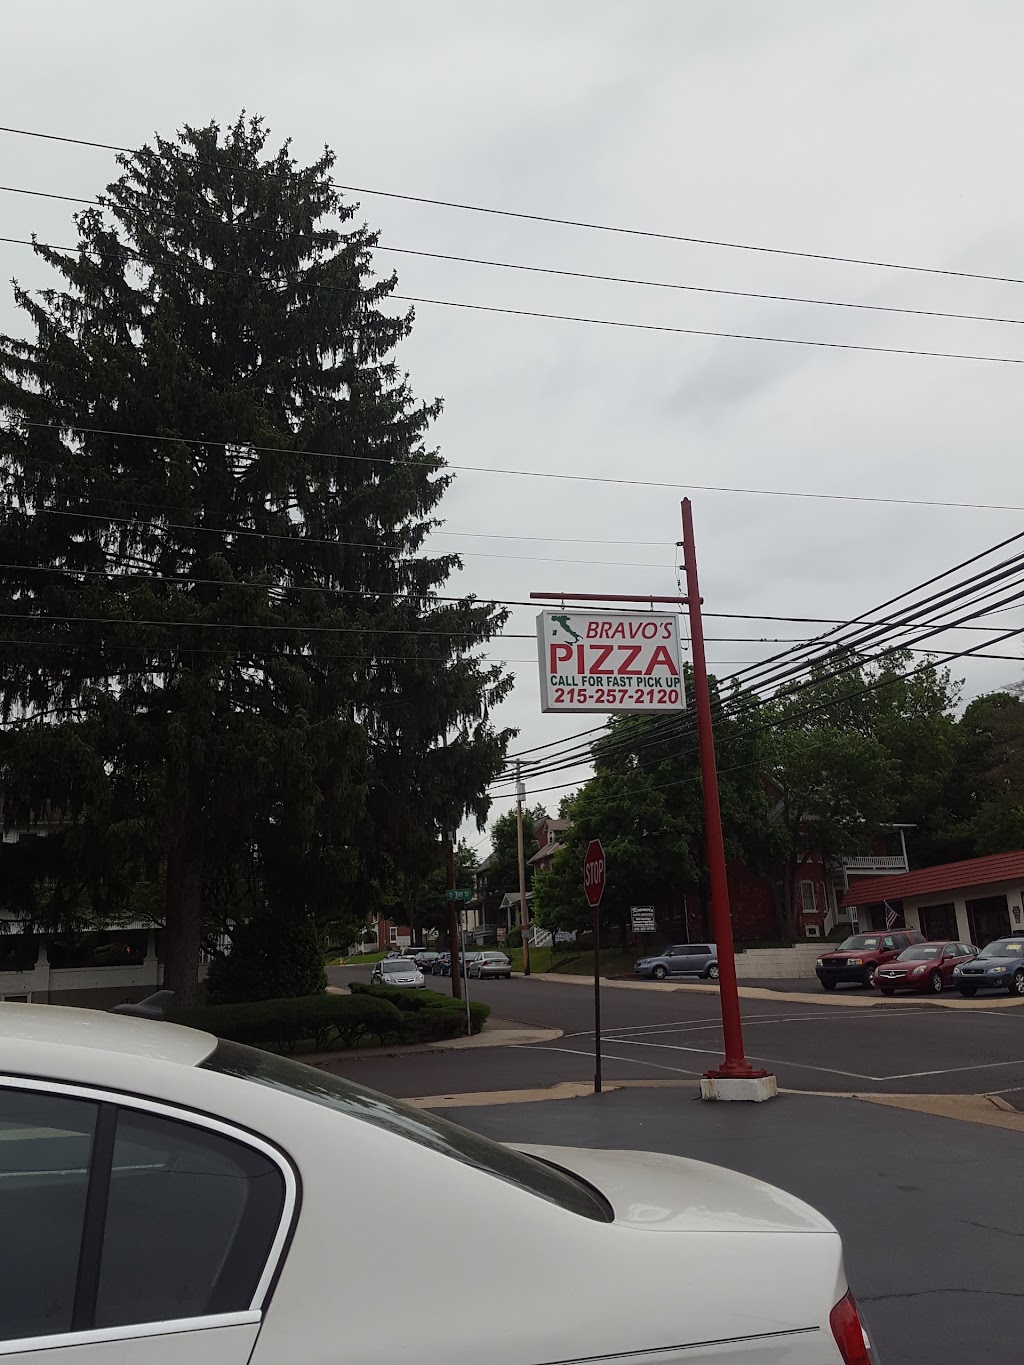 Bravos Pizza | 212 W Walnut St, Perkasie, PA 18944 | Phone: (215) 257-2120